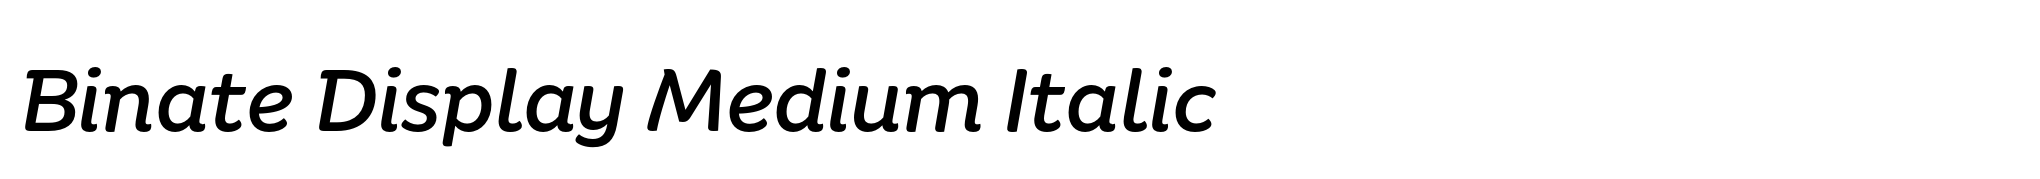 Binate Display Medium Italic image